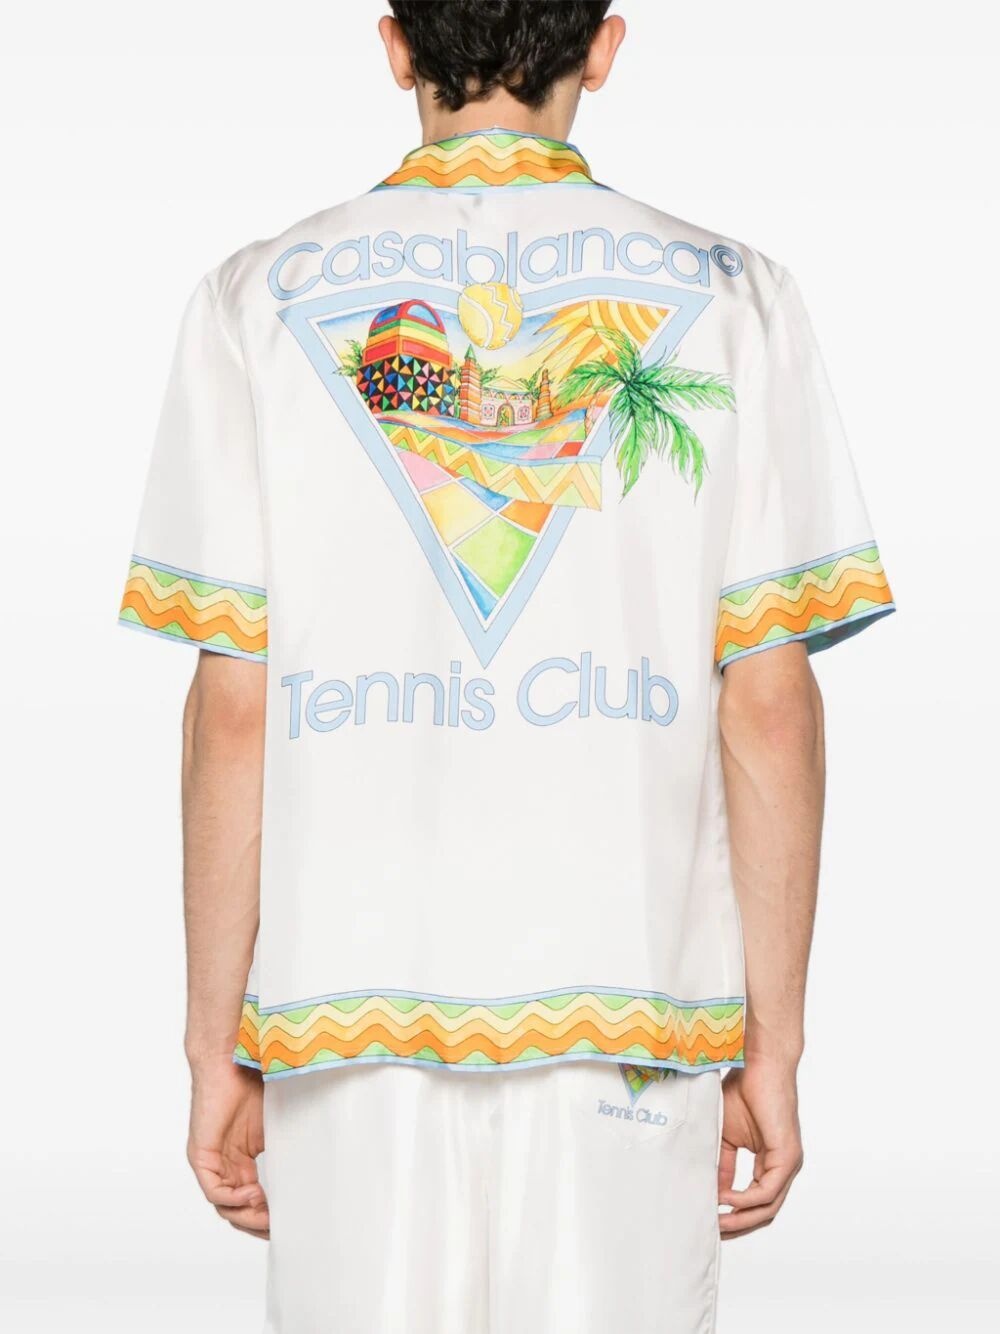 Afro cubism tennis club shirt - 7